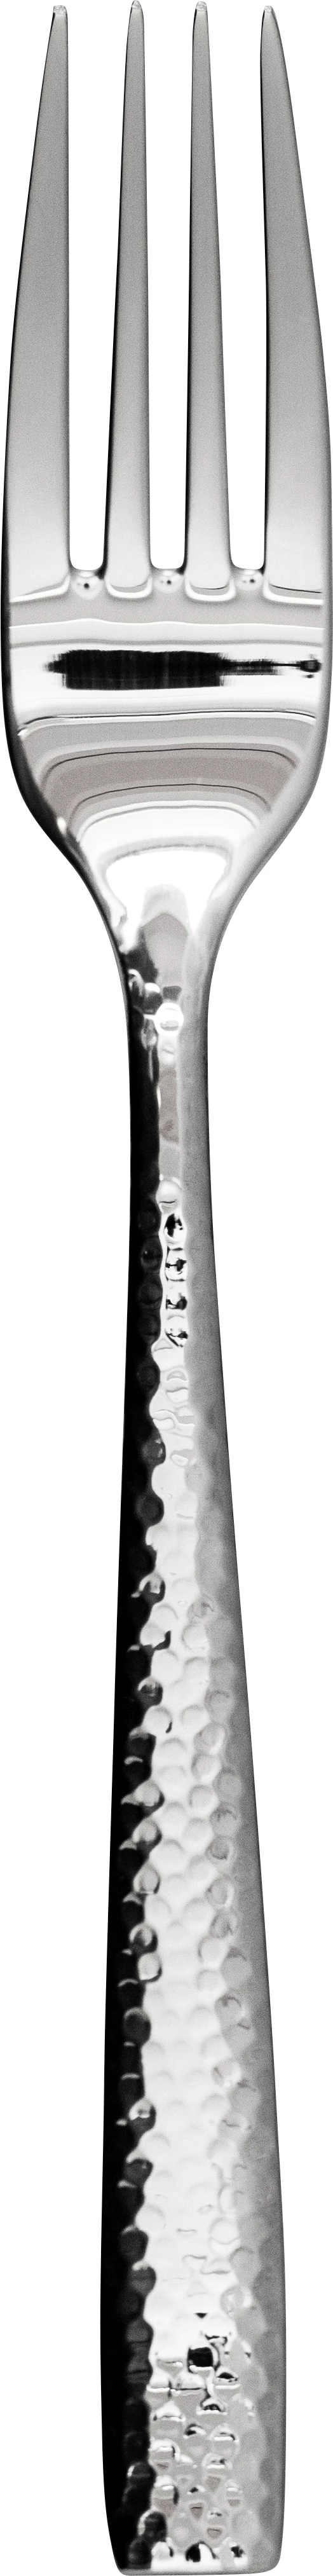 Crudo spisegaffel, 21 cm